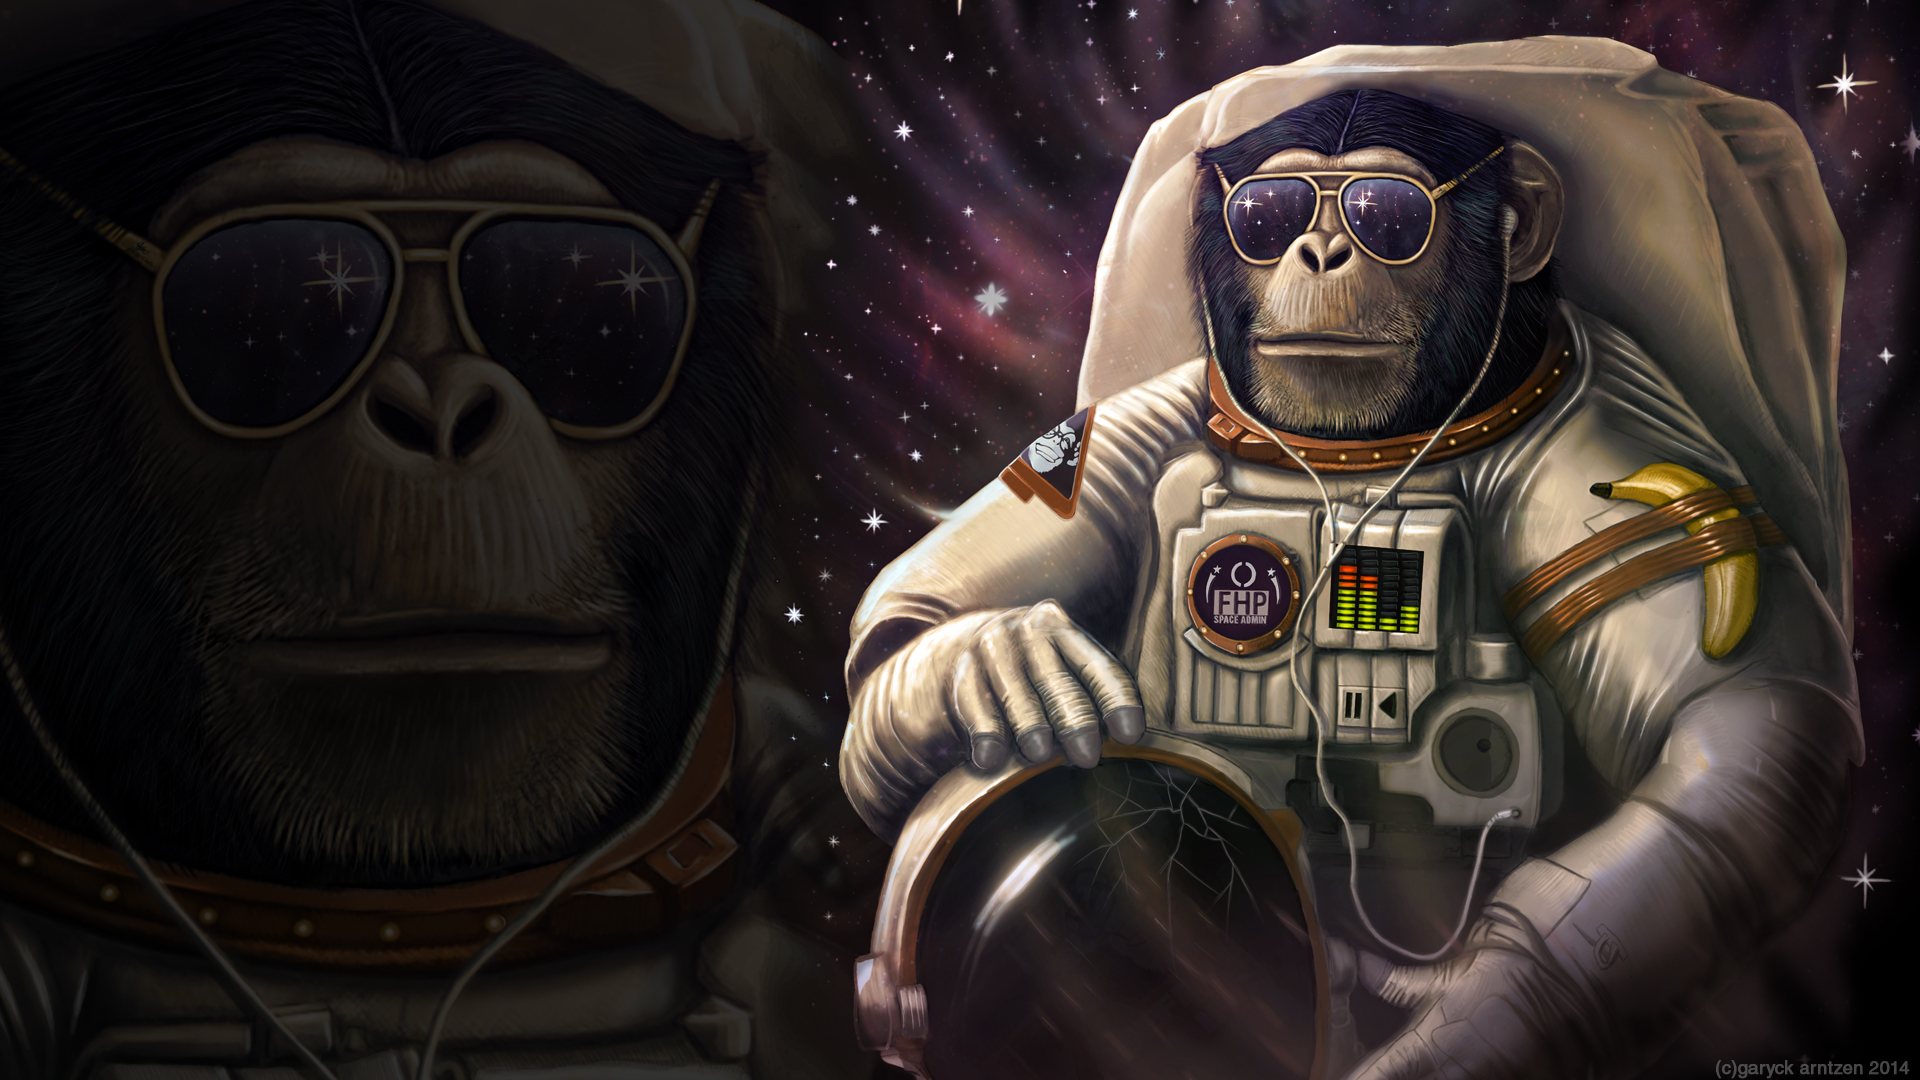 Monkey Sunglasses Astronaut WTF Banana wallpaper background 1920x1080